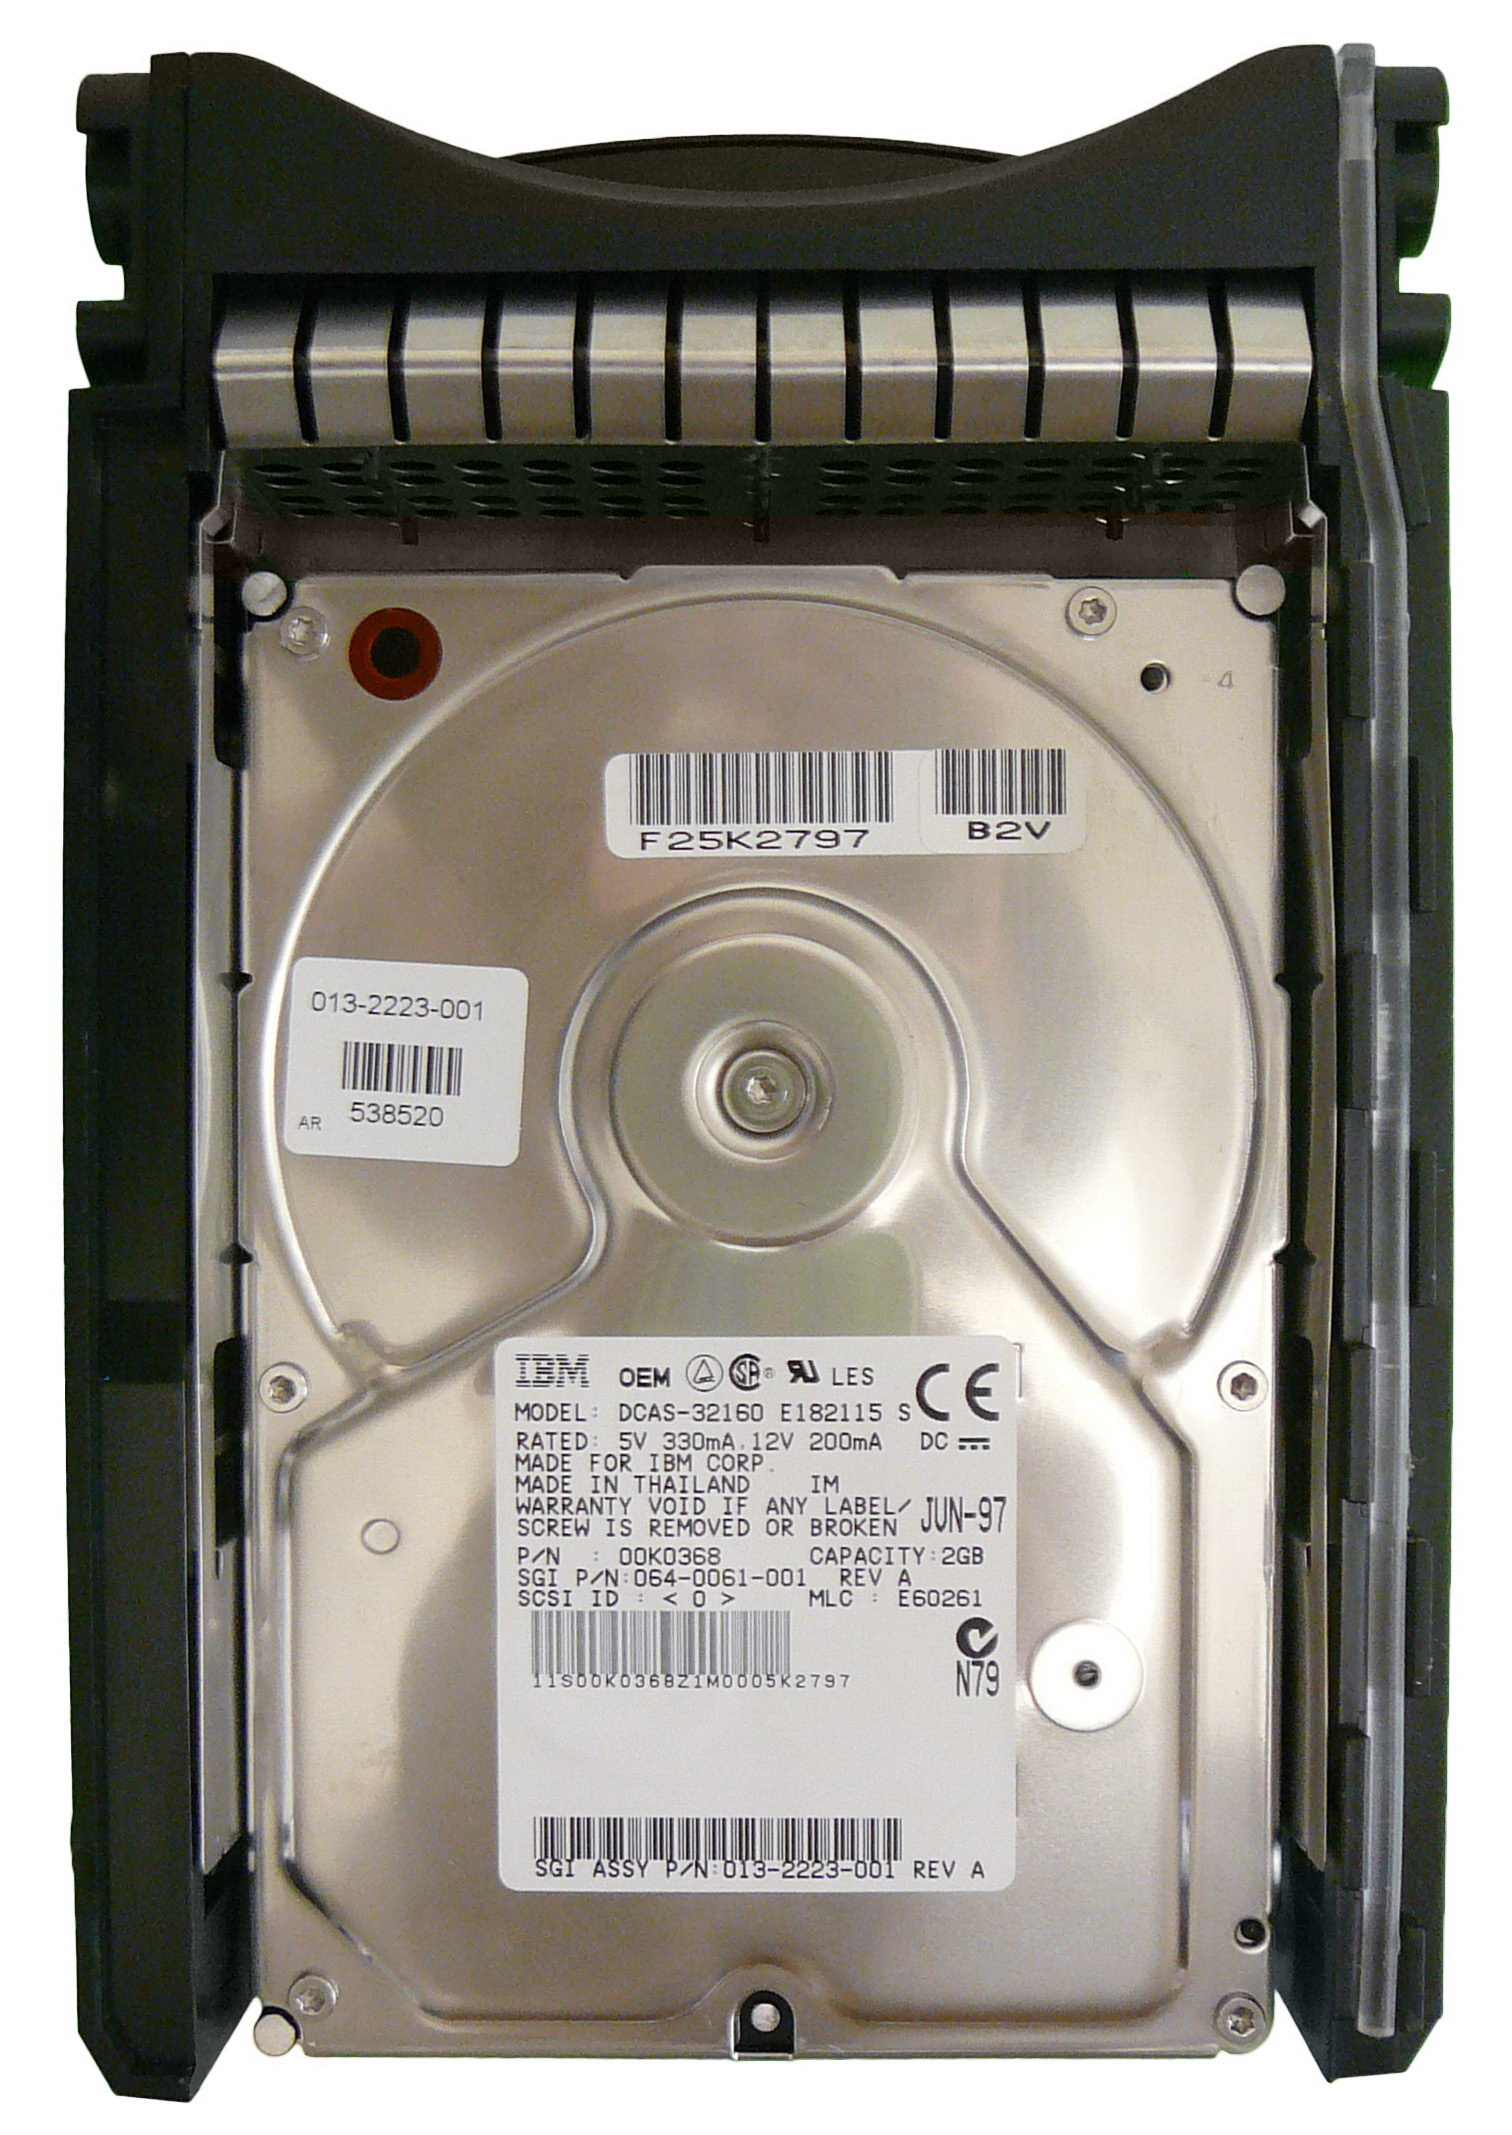 DCAS-32160 IBM Ultrastar 2ES 2.1GB 5400RPM Ultra SCSI 448KB Cache 68 Pin 3.5-inch Internal Hard Drive